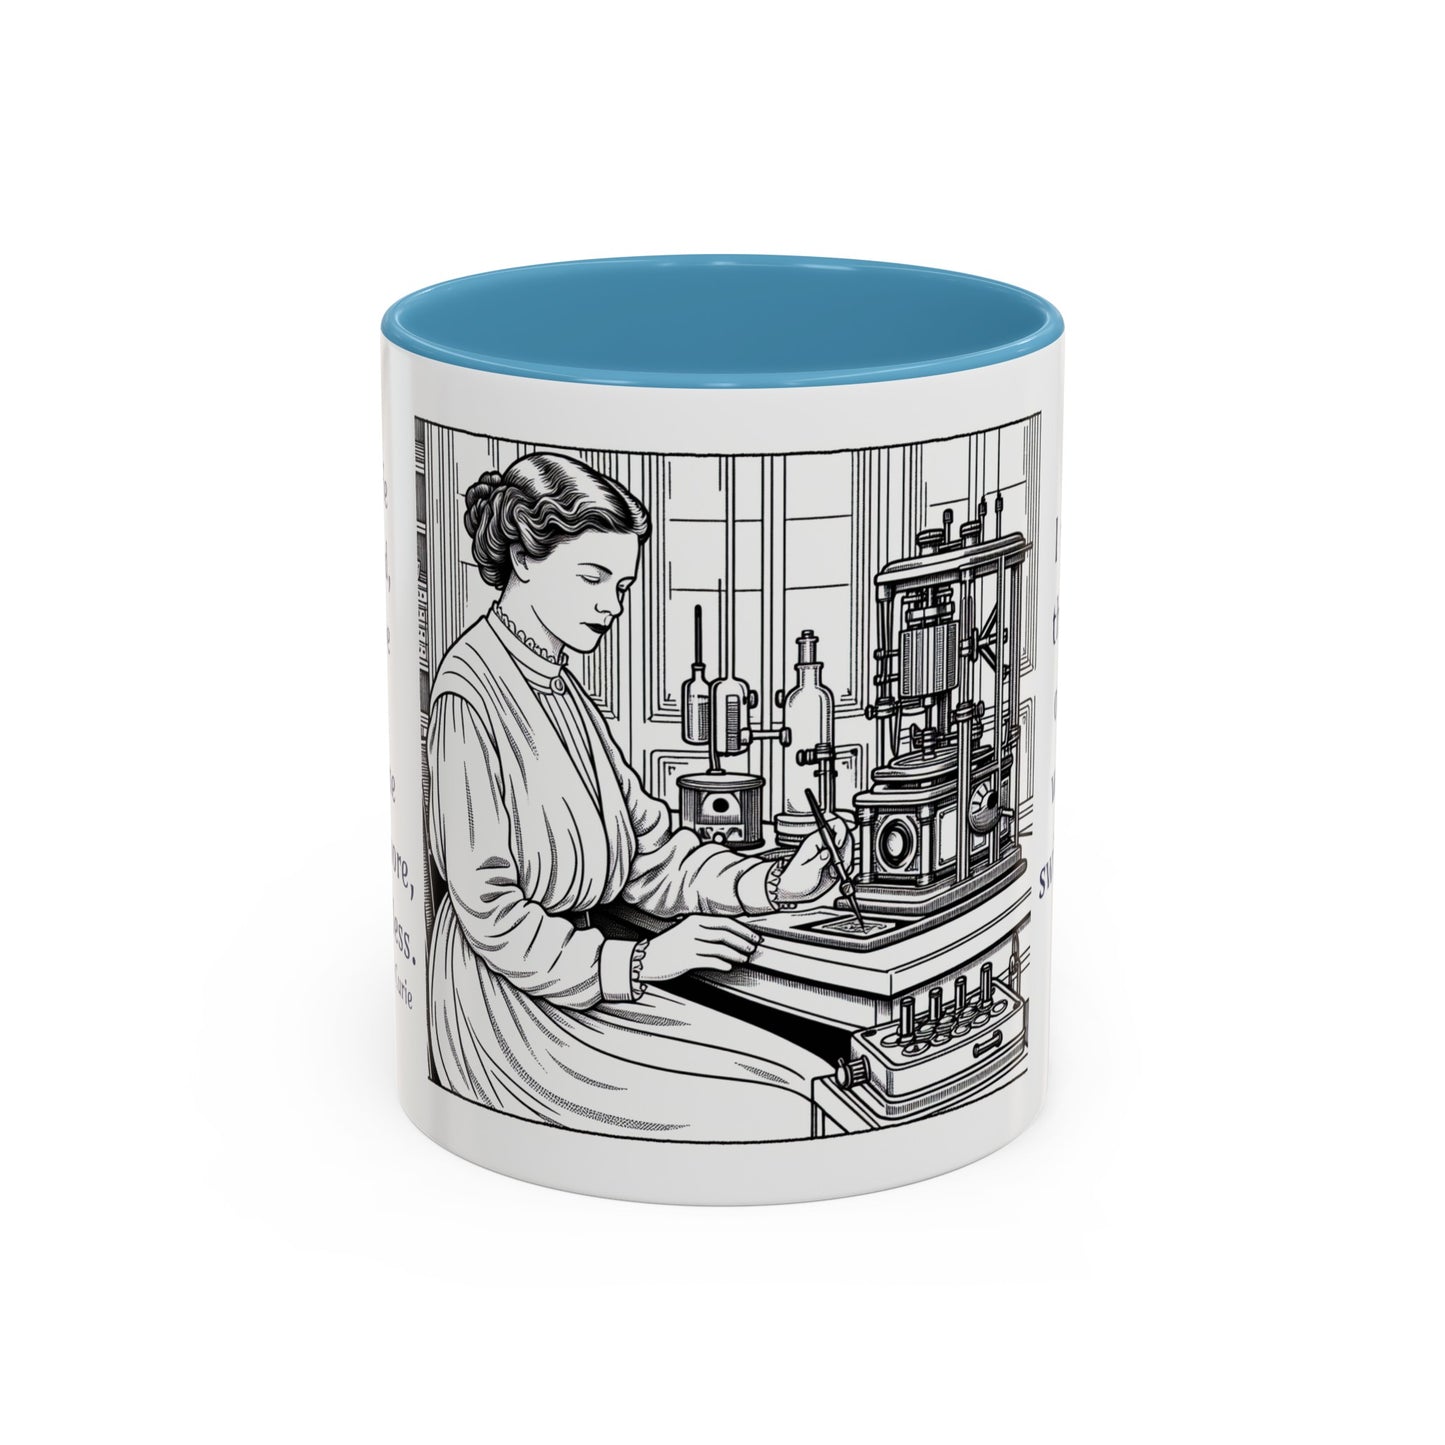 Marie Curie Inspirational Quotes Coffee Mug, 11 oz or 15oz